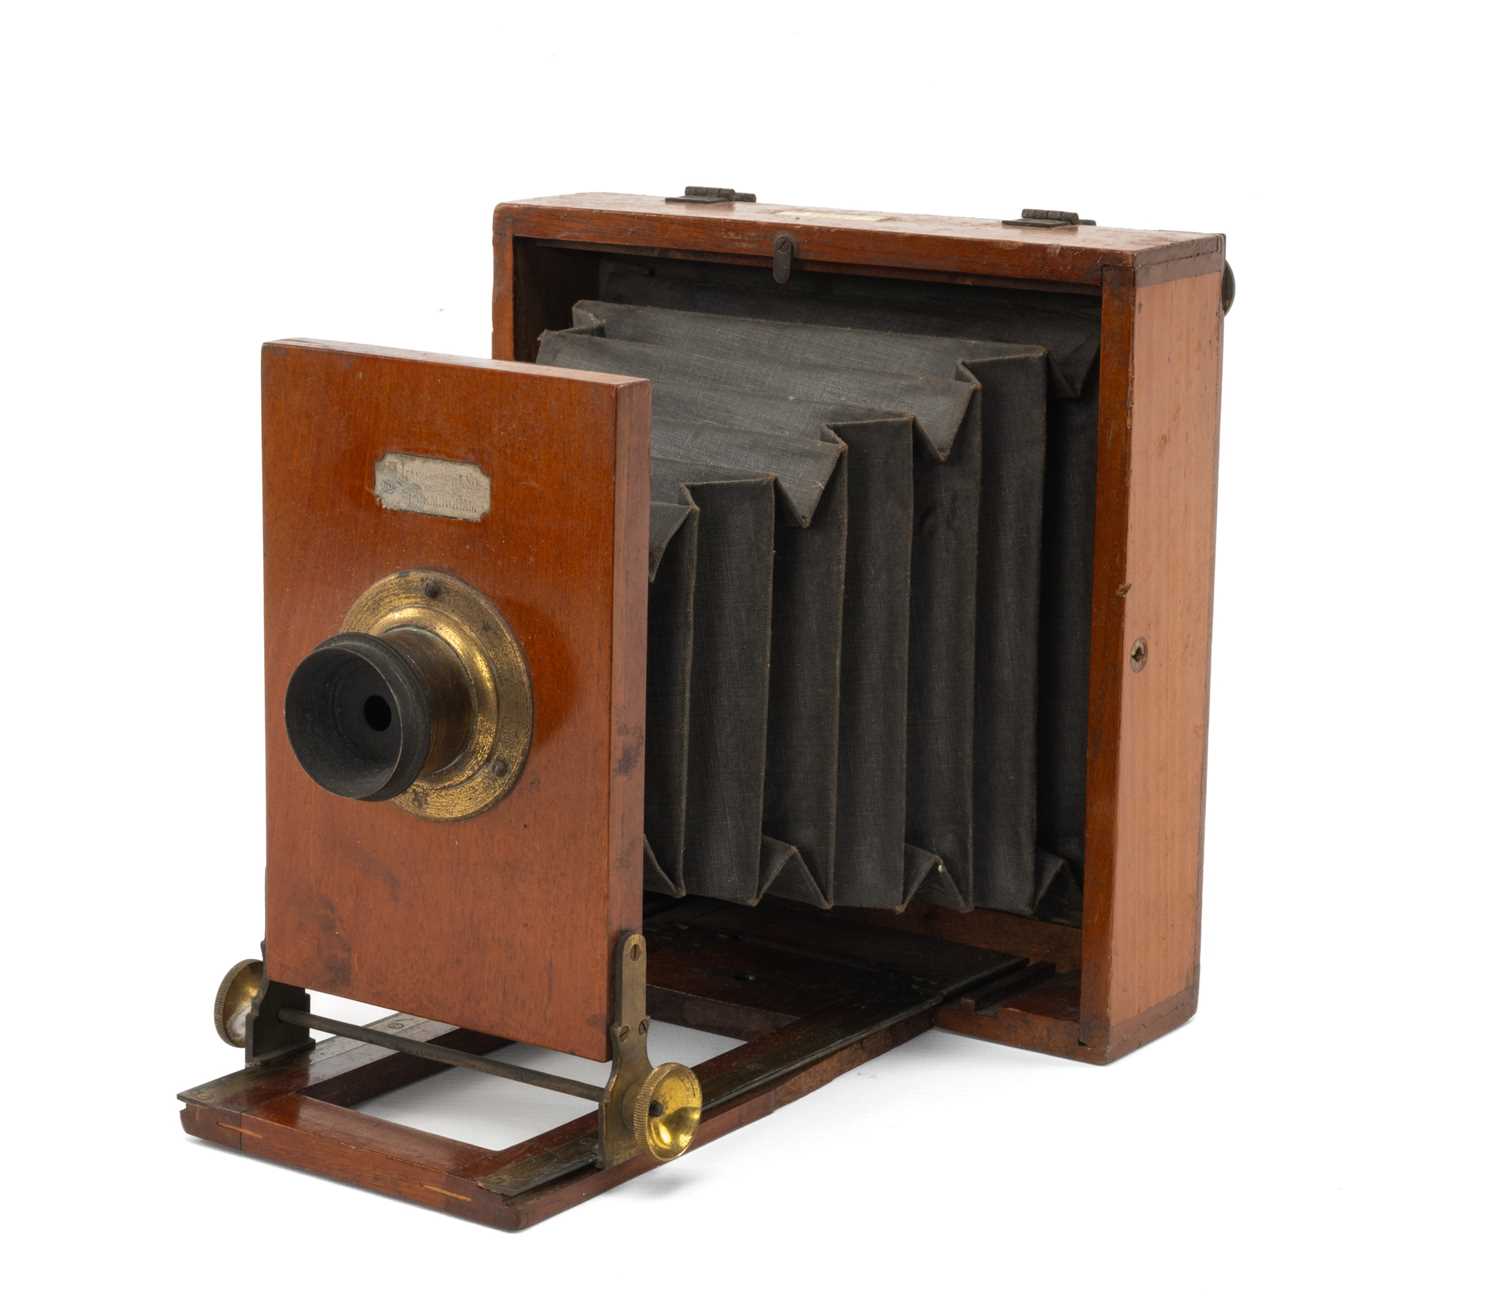 19TH C. J. LANCASTER LE 'MERVEILLEUX' MAHOGANY STUDIO CAMERA, with f16-33 wheel aperture, bellows